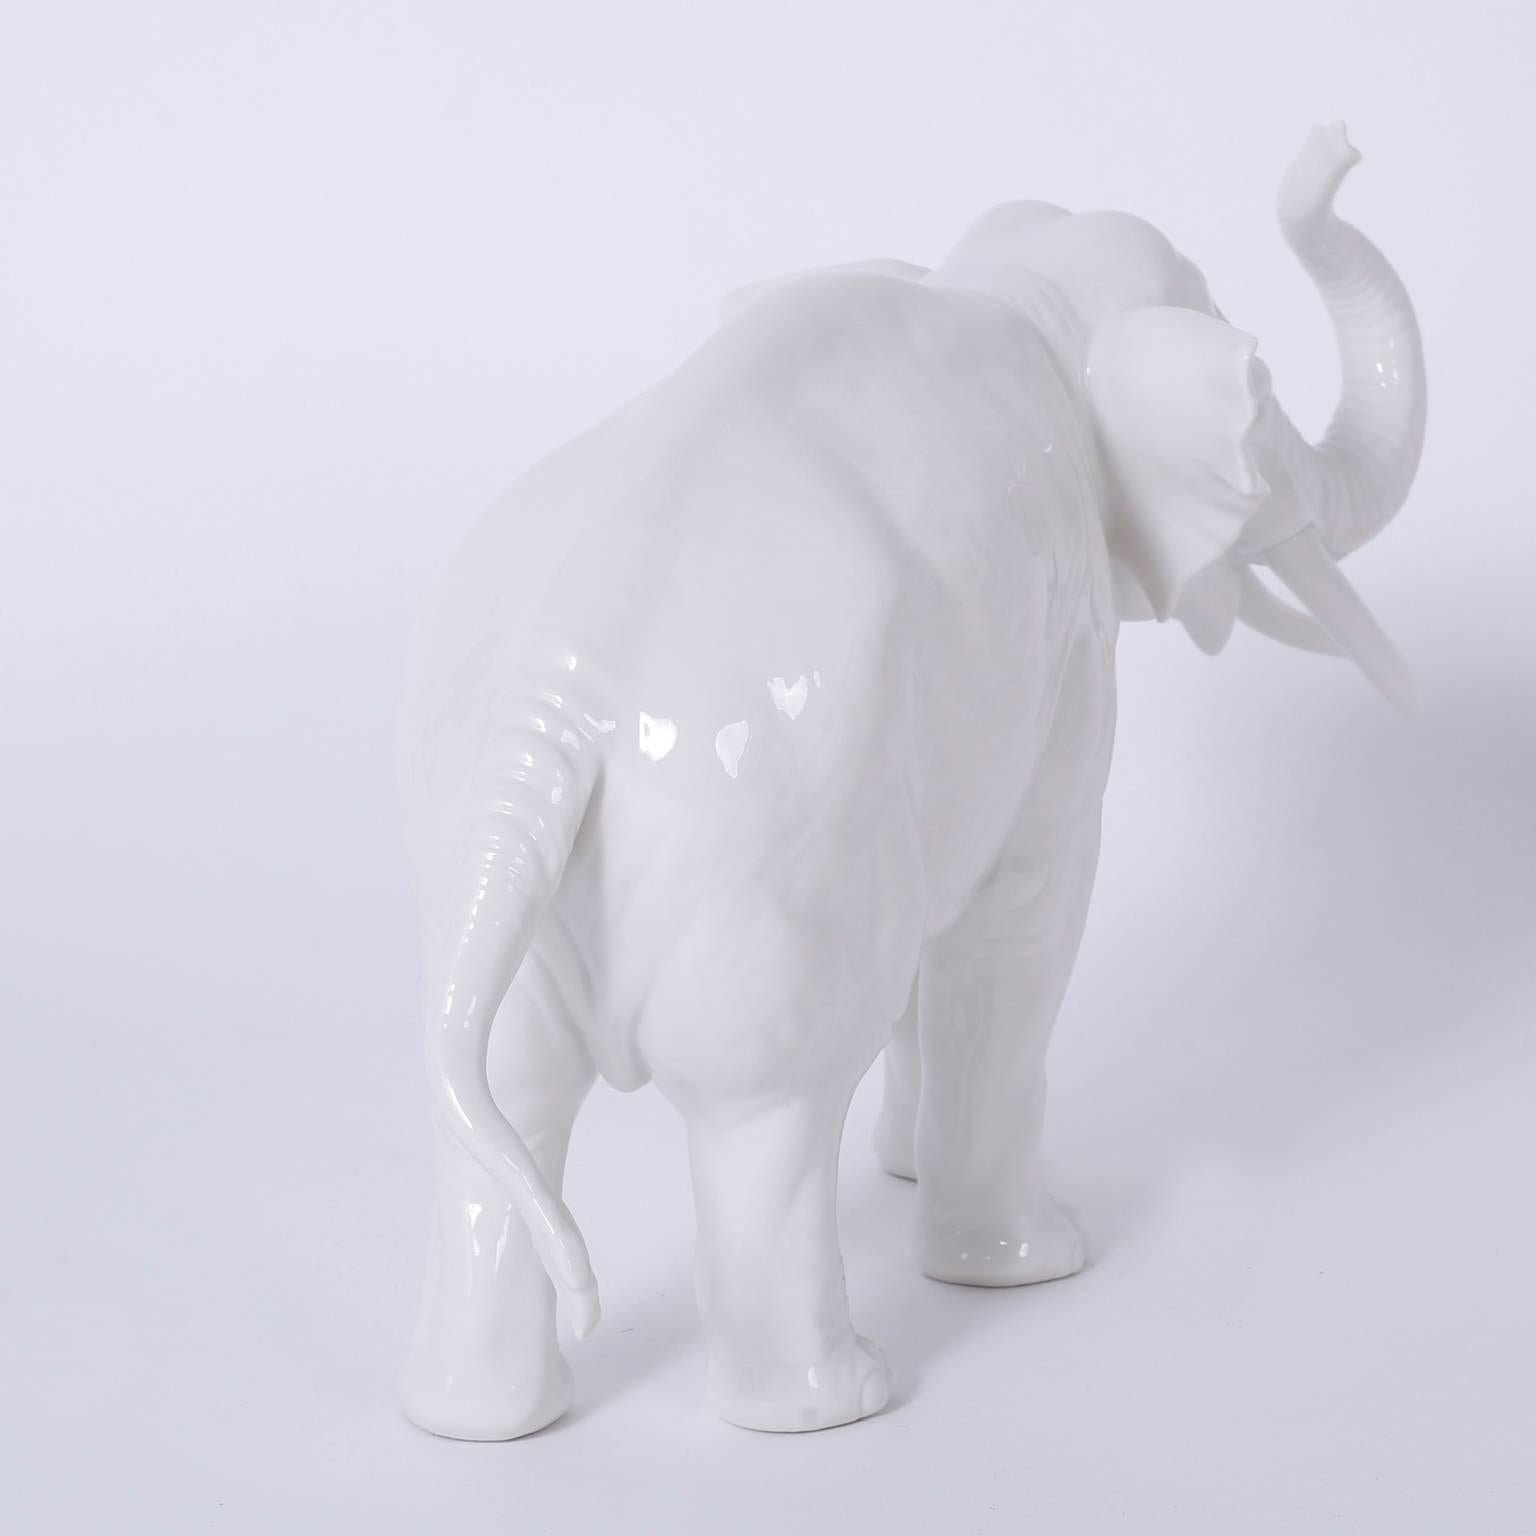 German Numphenberg Porcelain Elephant with a White Glaze